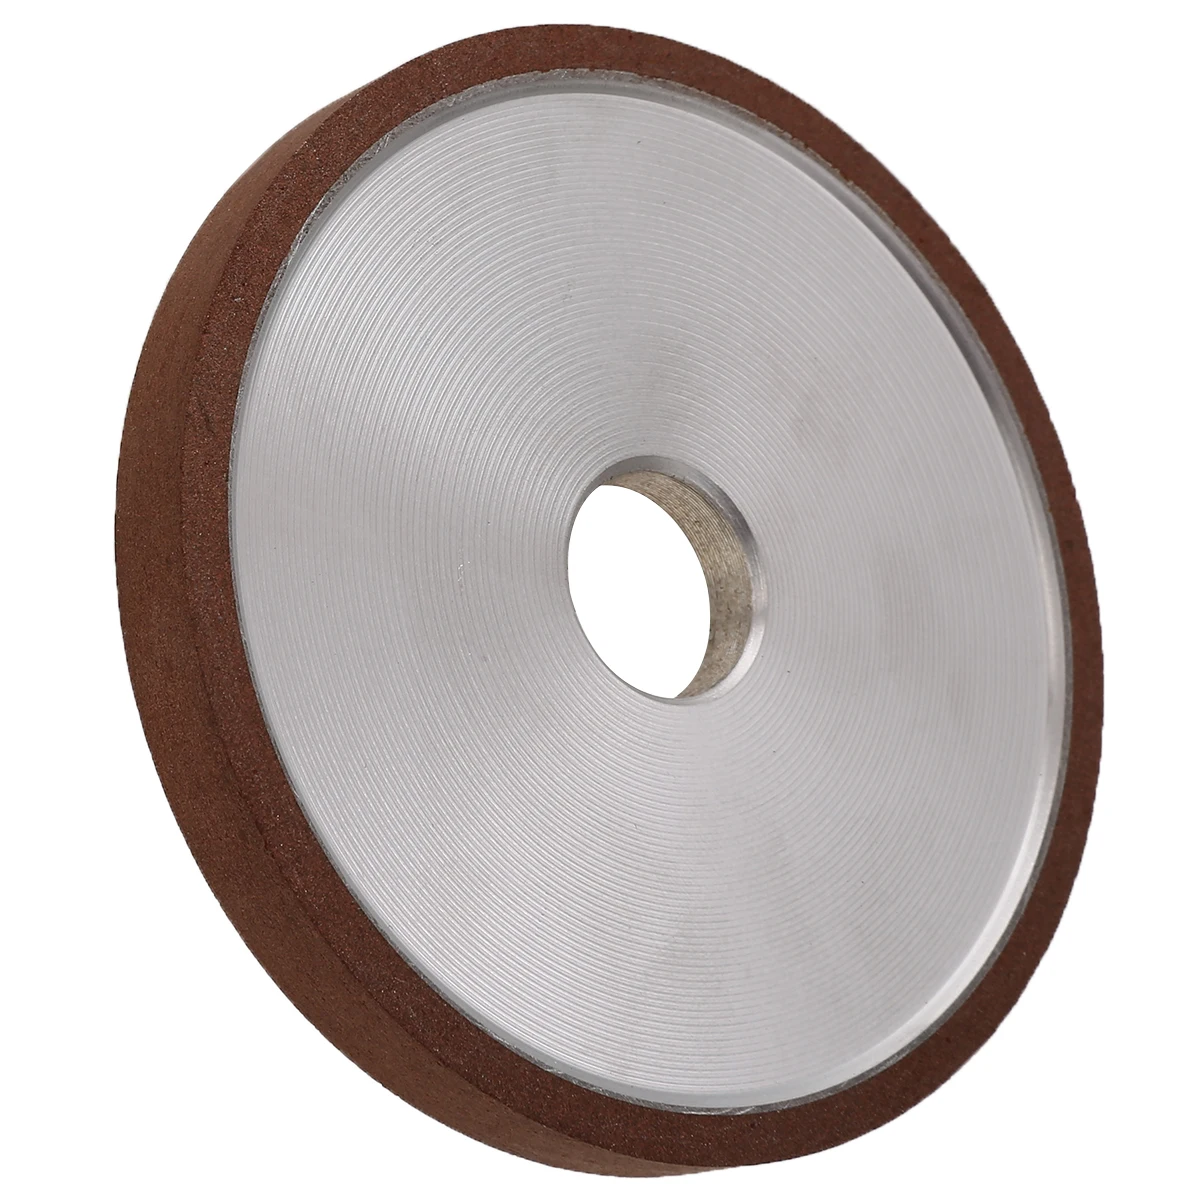 Details about   100mm Diamond Grinding Wheel For Metal Diamond Wheel Sharpener 180Grit 20mm Hole 